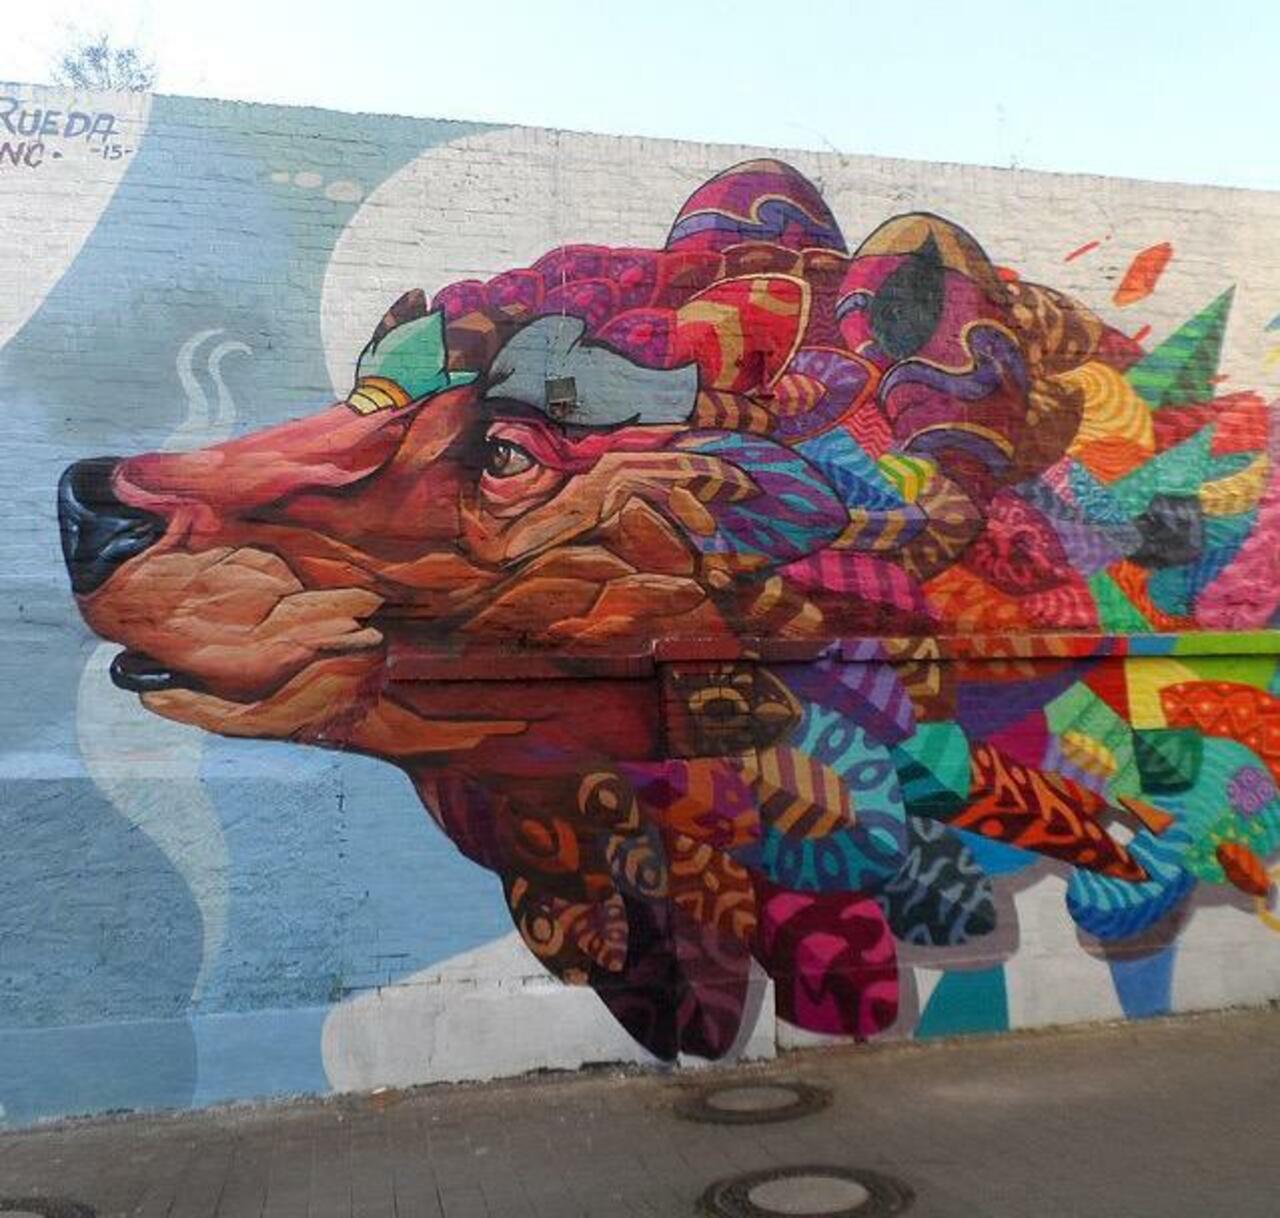 New tumblr post: "New tumblr post: "New tumblr post: "Farid Rueda Street Art 

#art #graffiti #mural #streetart http://t.co/pImxzoaCfx" …"…